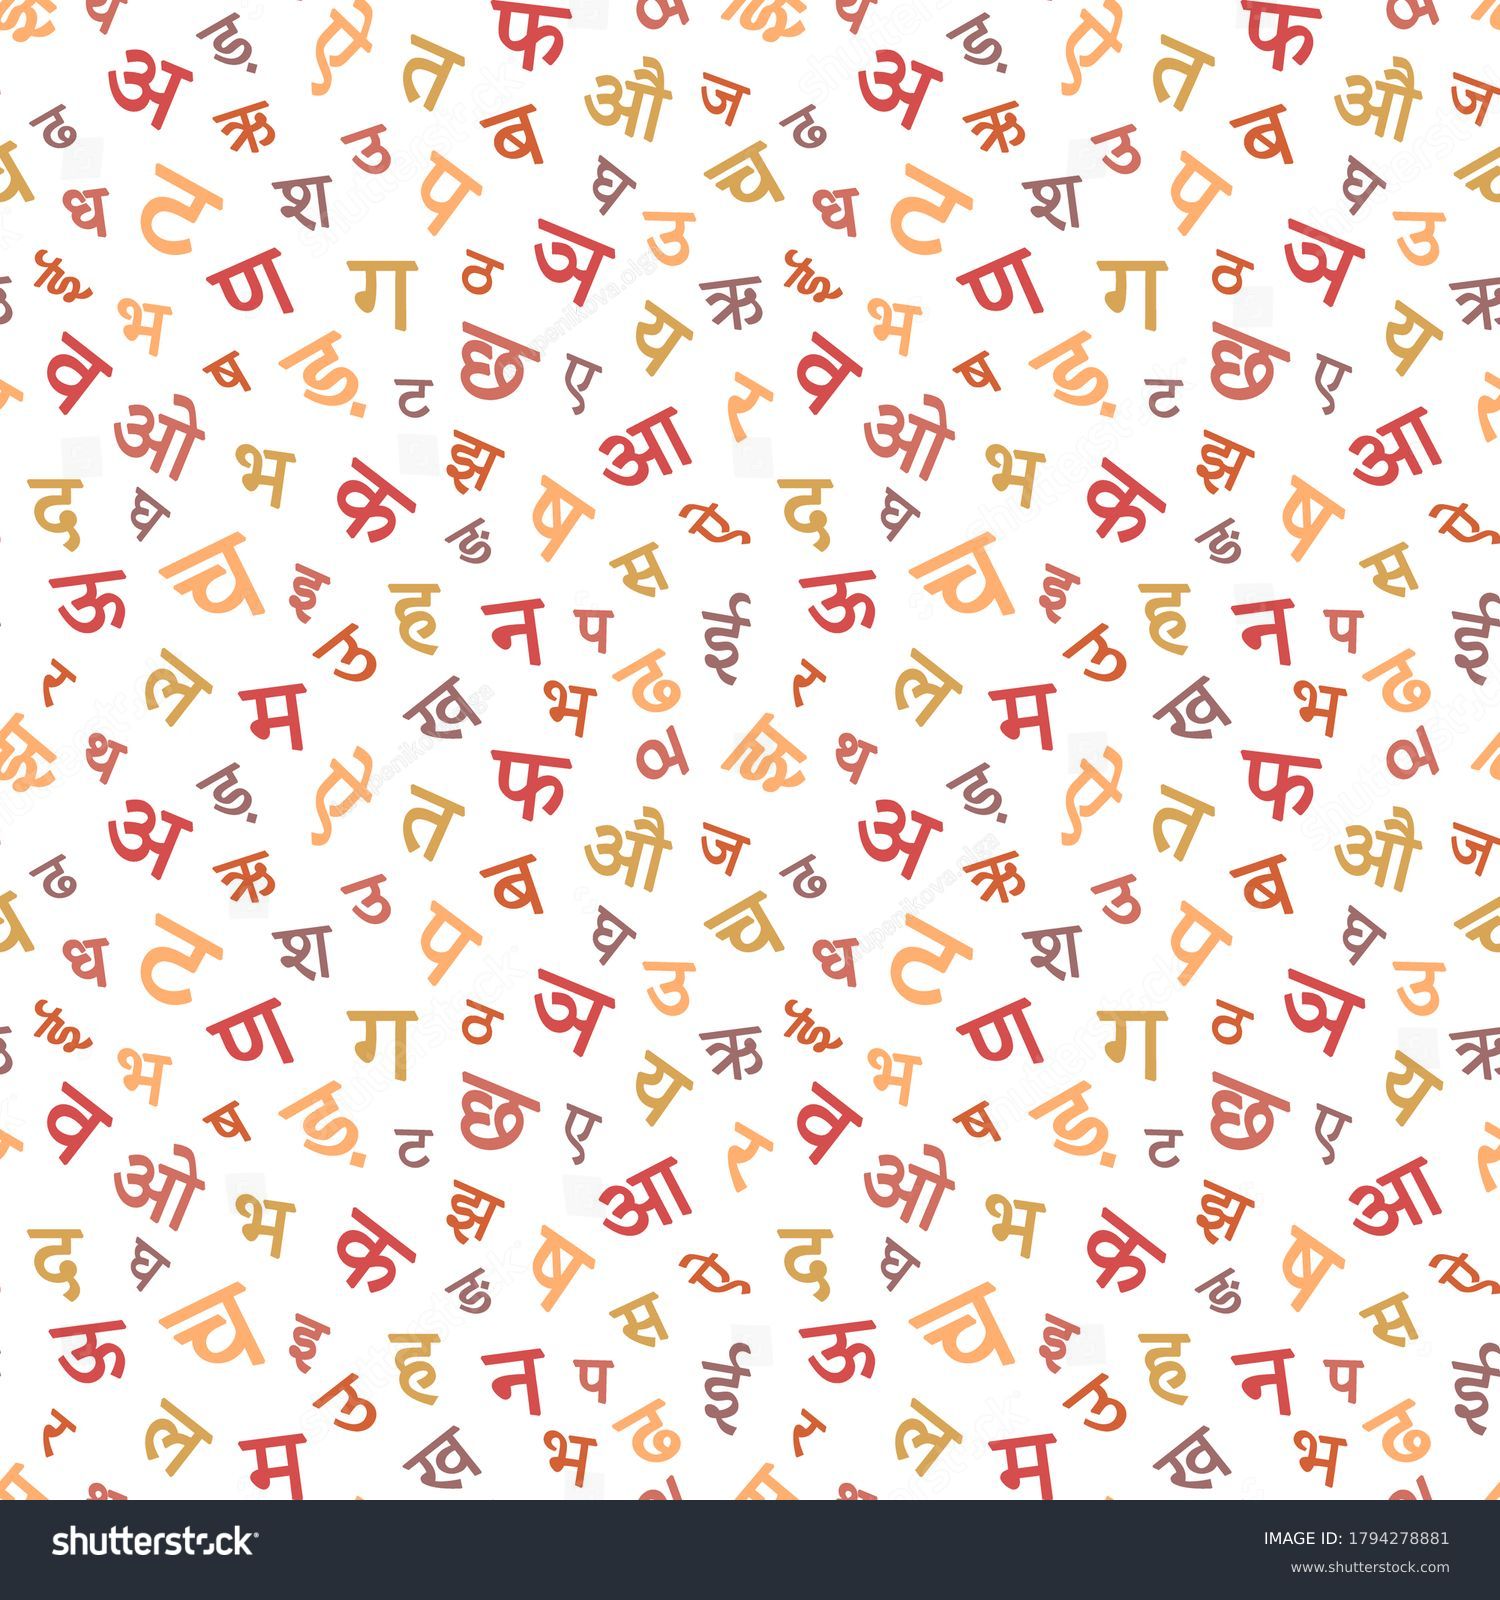 SVG of Seamless pattern with Devanagari alphabet. Sanskrit,Hindi, Marathi,Nepali,Bihari,Bhili, Konkani, Bhojpuri,Newari languages. Simple background. Vector illustration svg